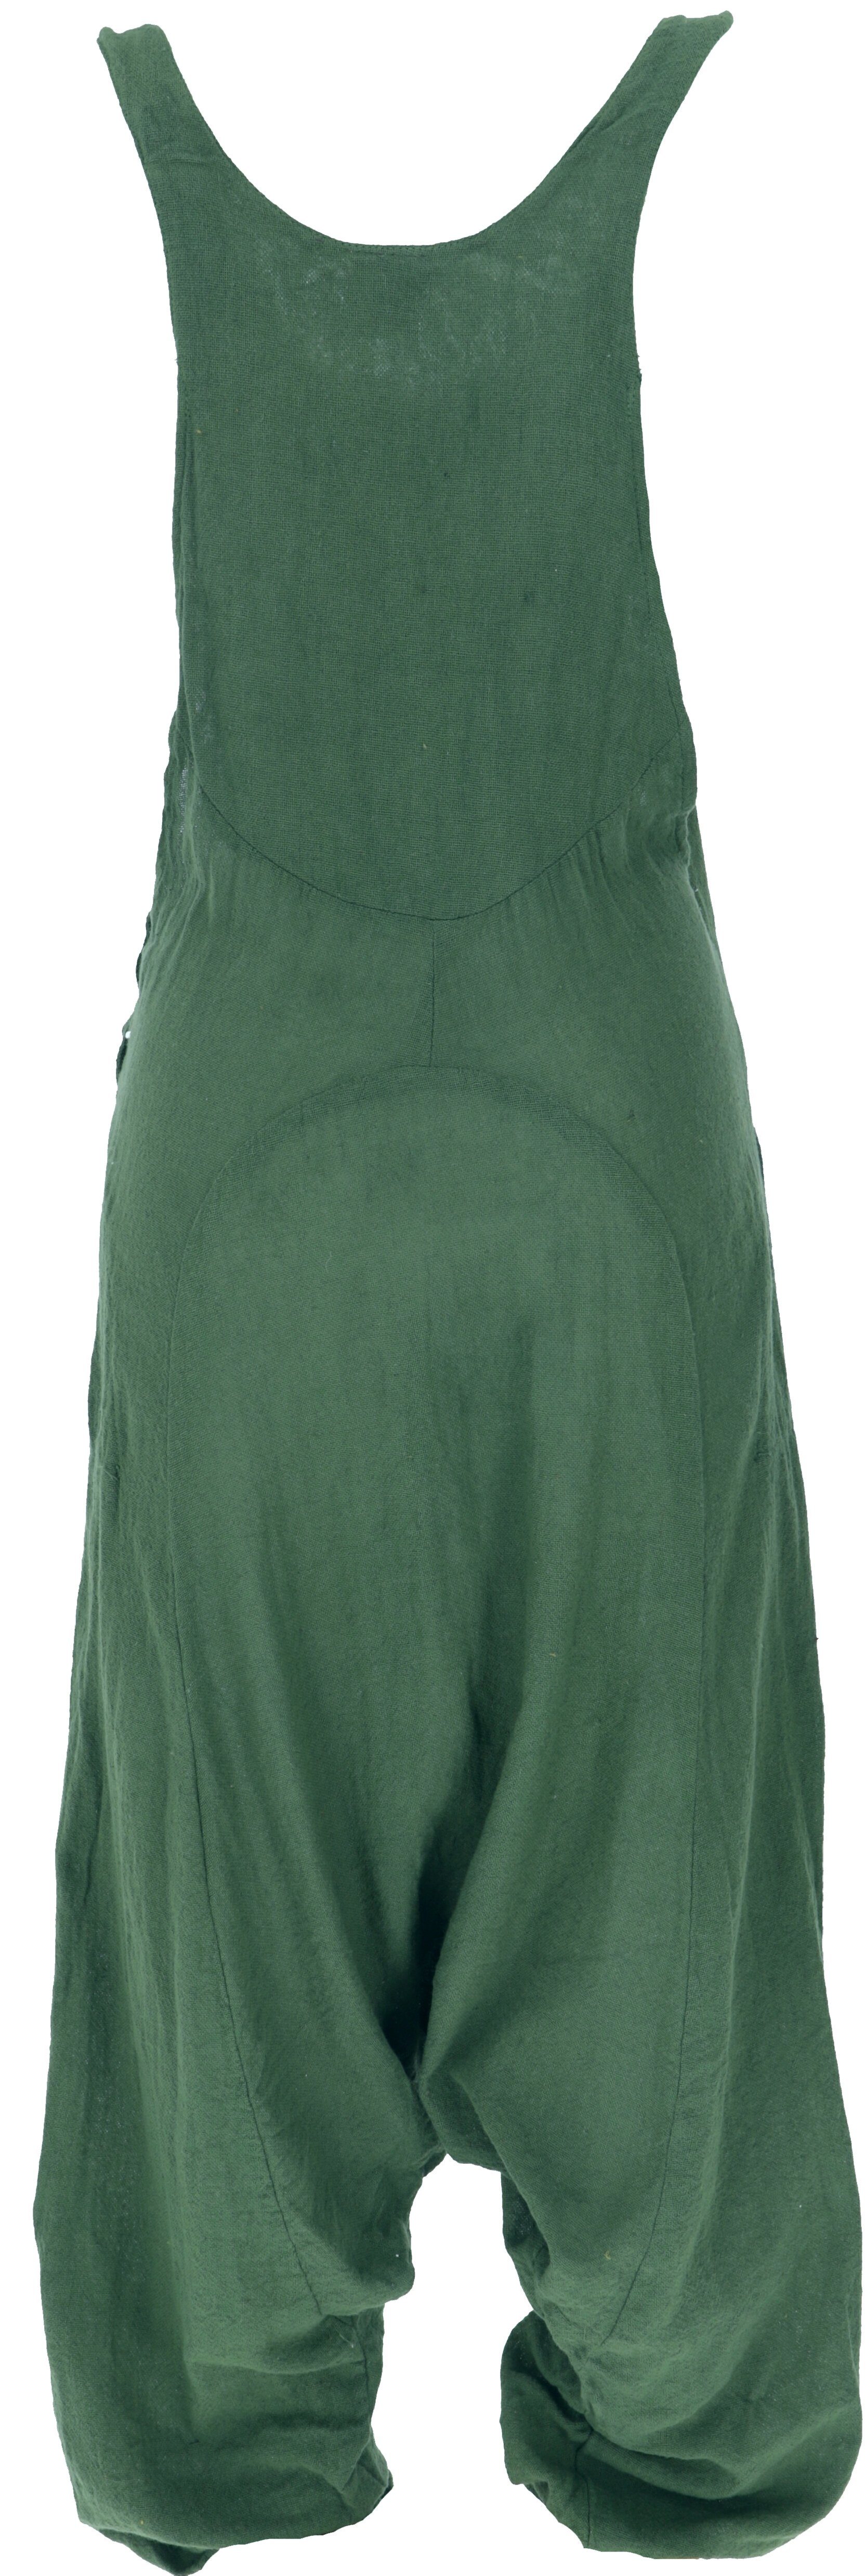 Guru-Shop Relaxhose Latzhose, Natürliche olivgrün luftiger.. Ethno Bekleidung Boho alternative Overall, Style